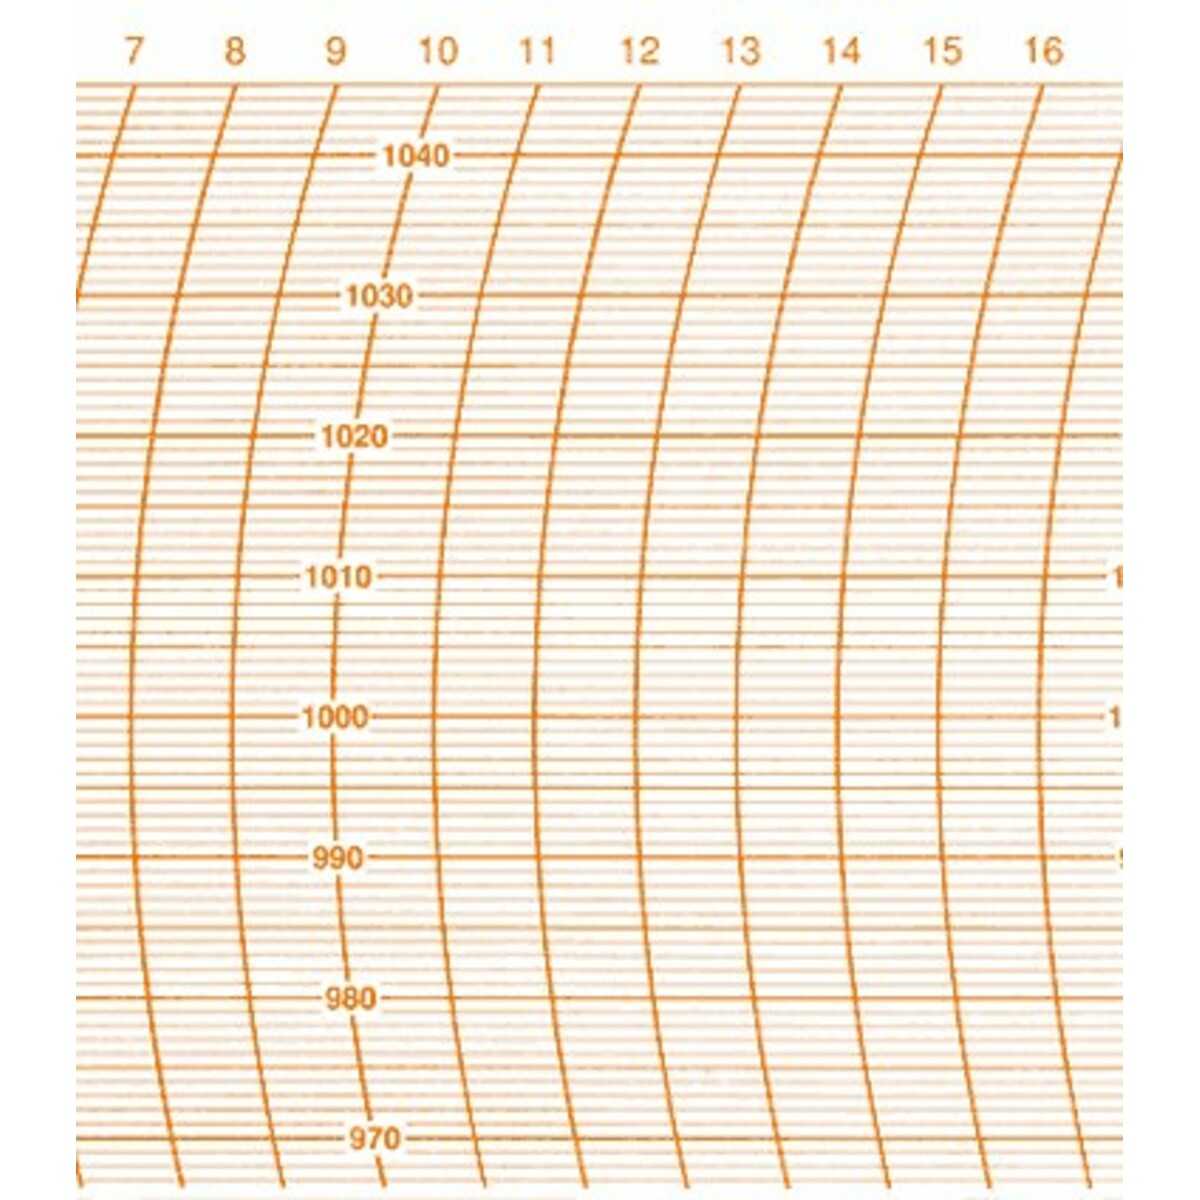 Diagrammes 8hPa-mensuel,1x50pcs(h=108mm)